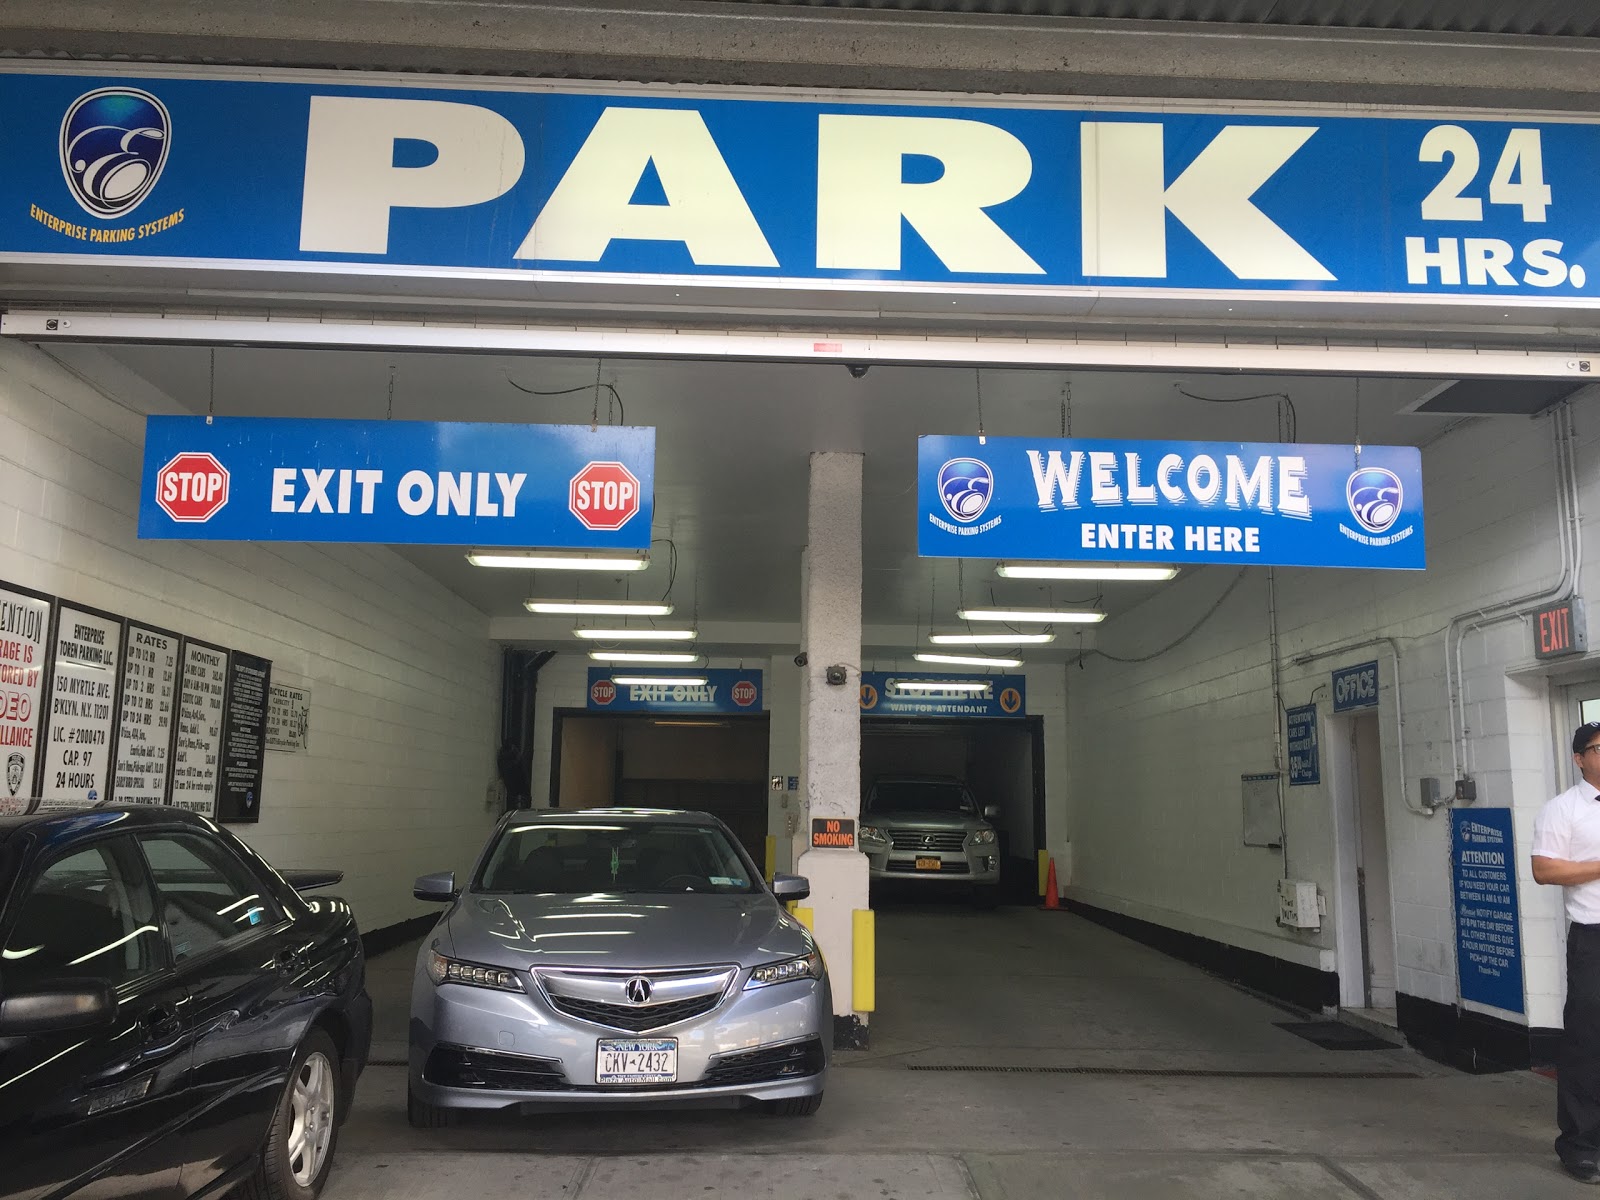 Photo of Enterprise Toren Parking LLC in New York City, New York, United States - 4 Picture of Point of interest, Establishment, Parking